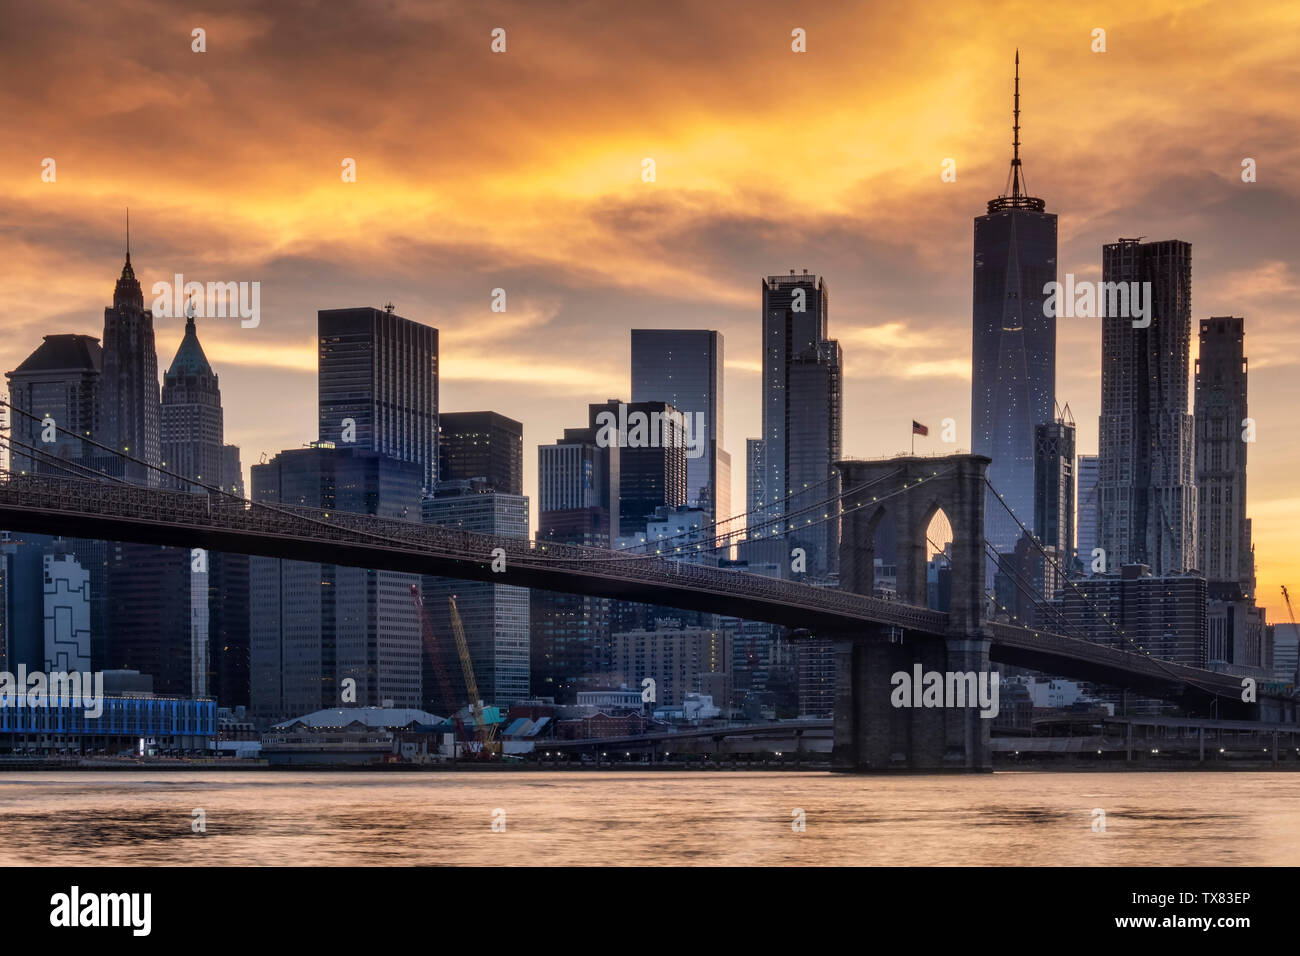 The Brooklyn Bridge, East River and Manhattan skyline at sunset, New York, USA Stock Photo